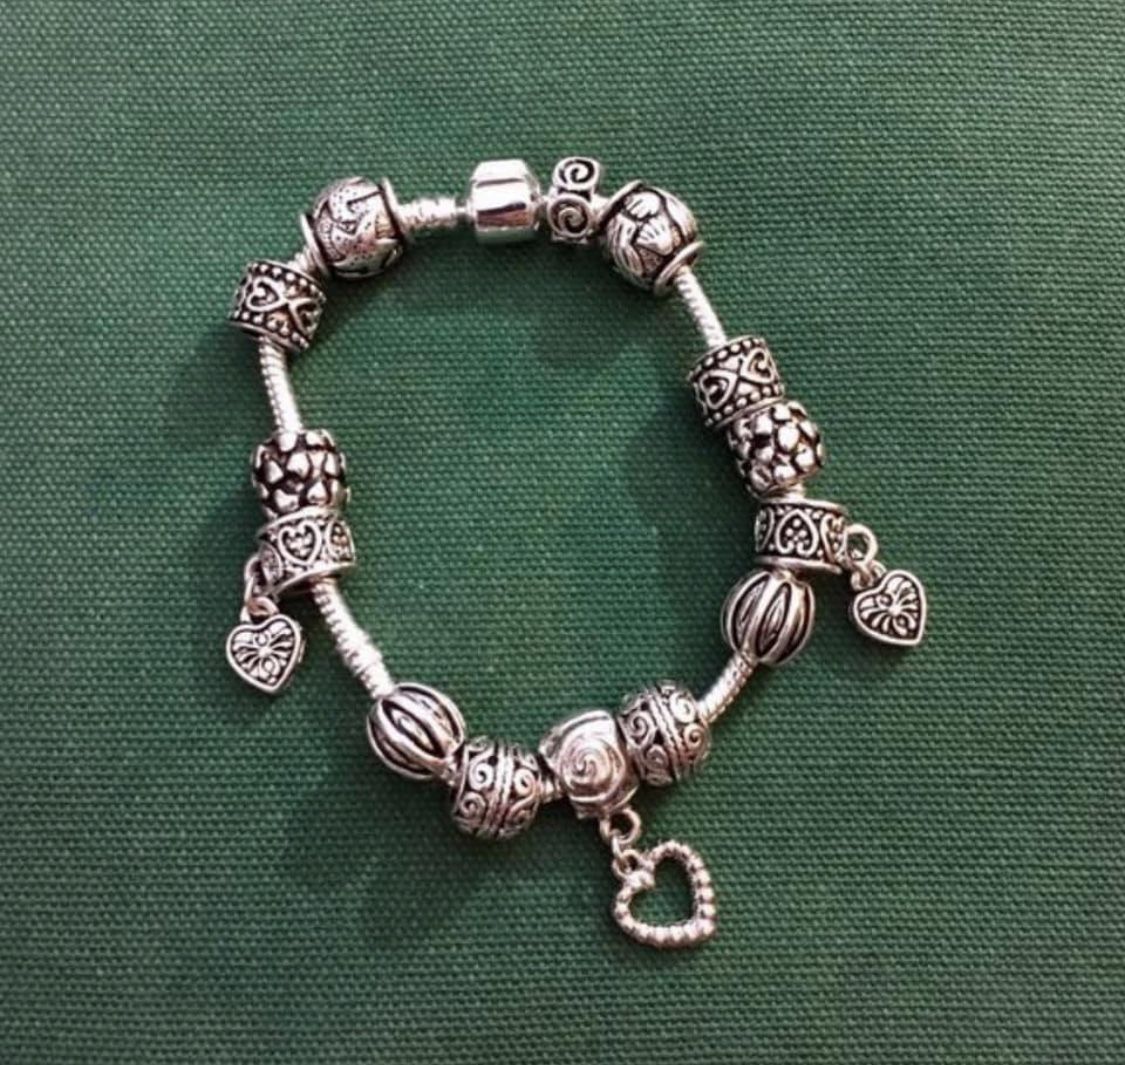 Charm bracelet like Pandora style enamel, silver plated over zinc alloy